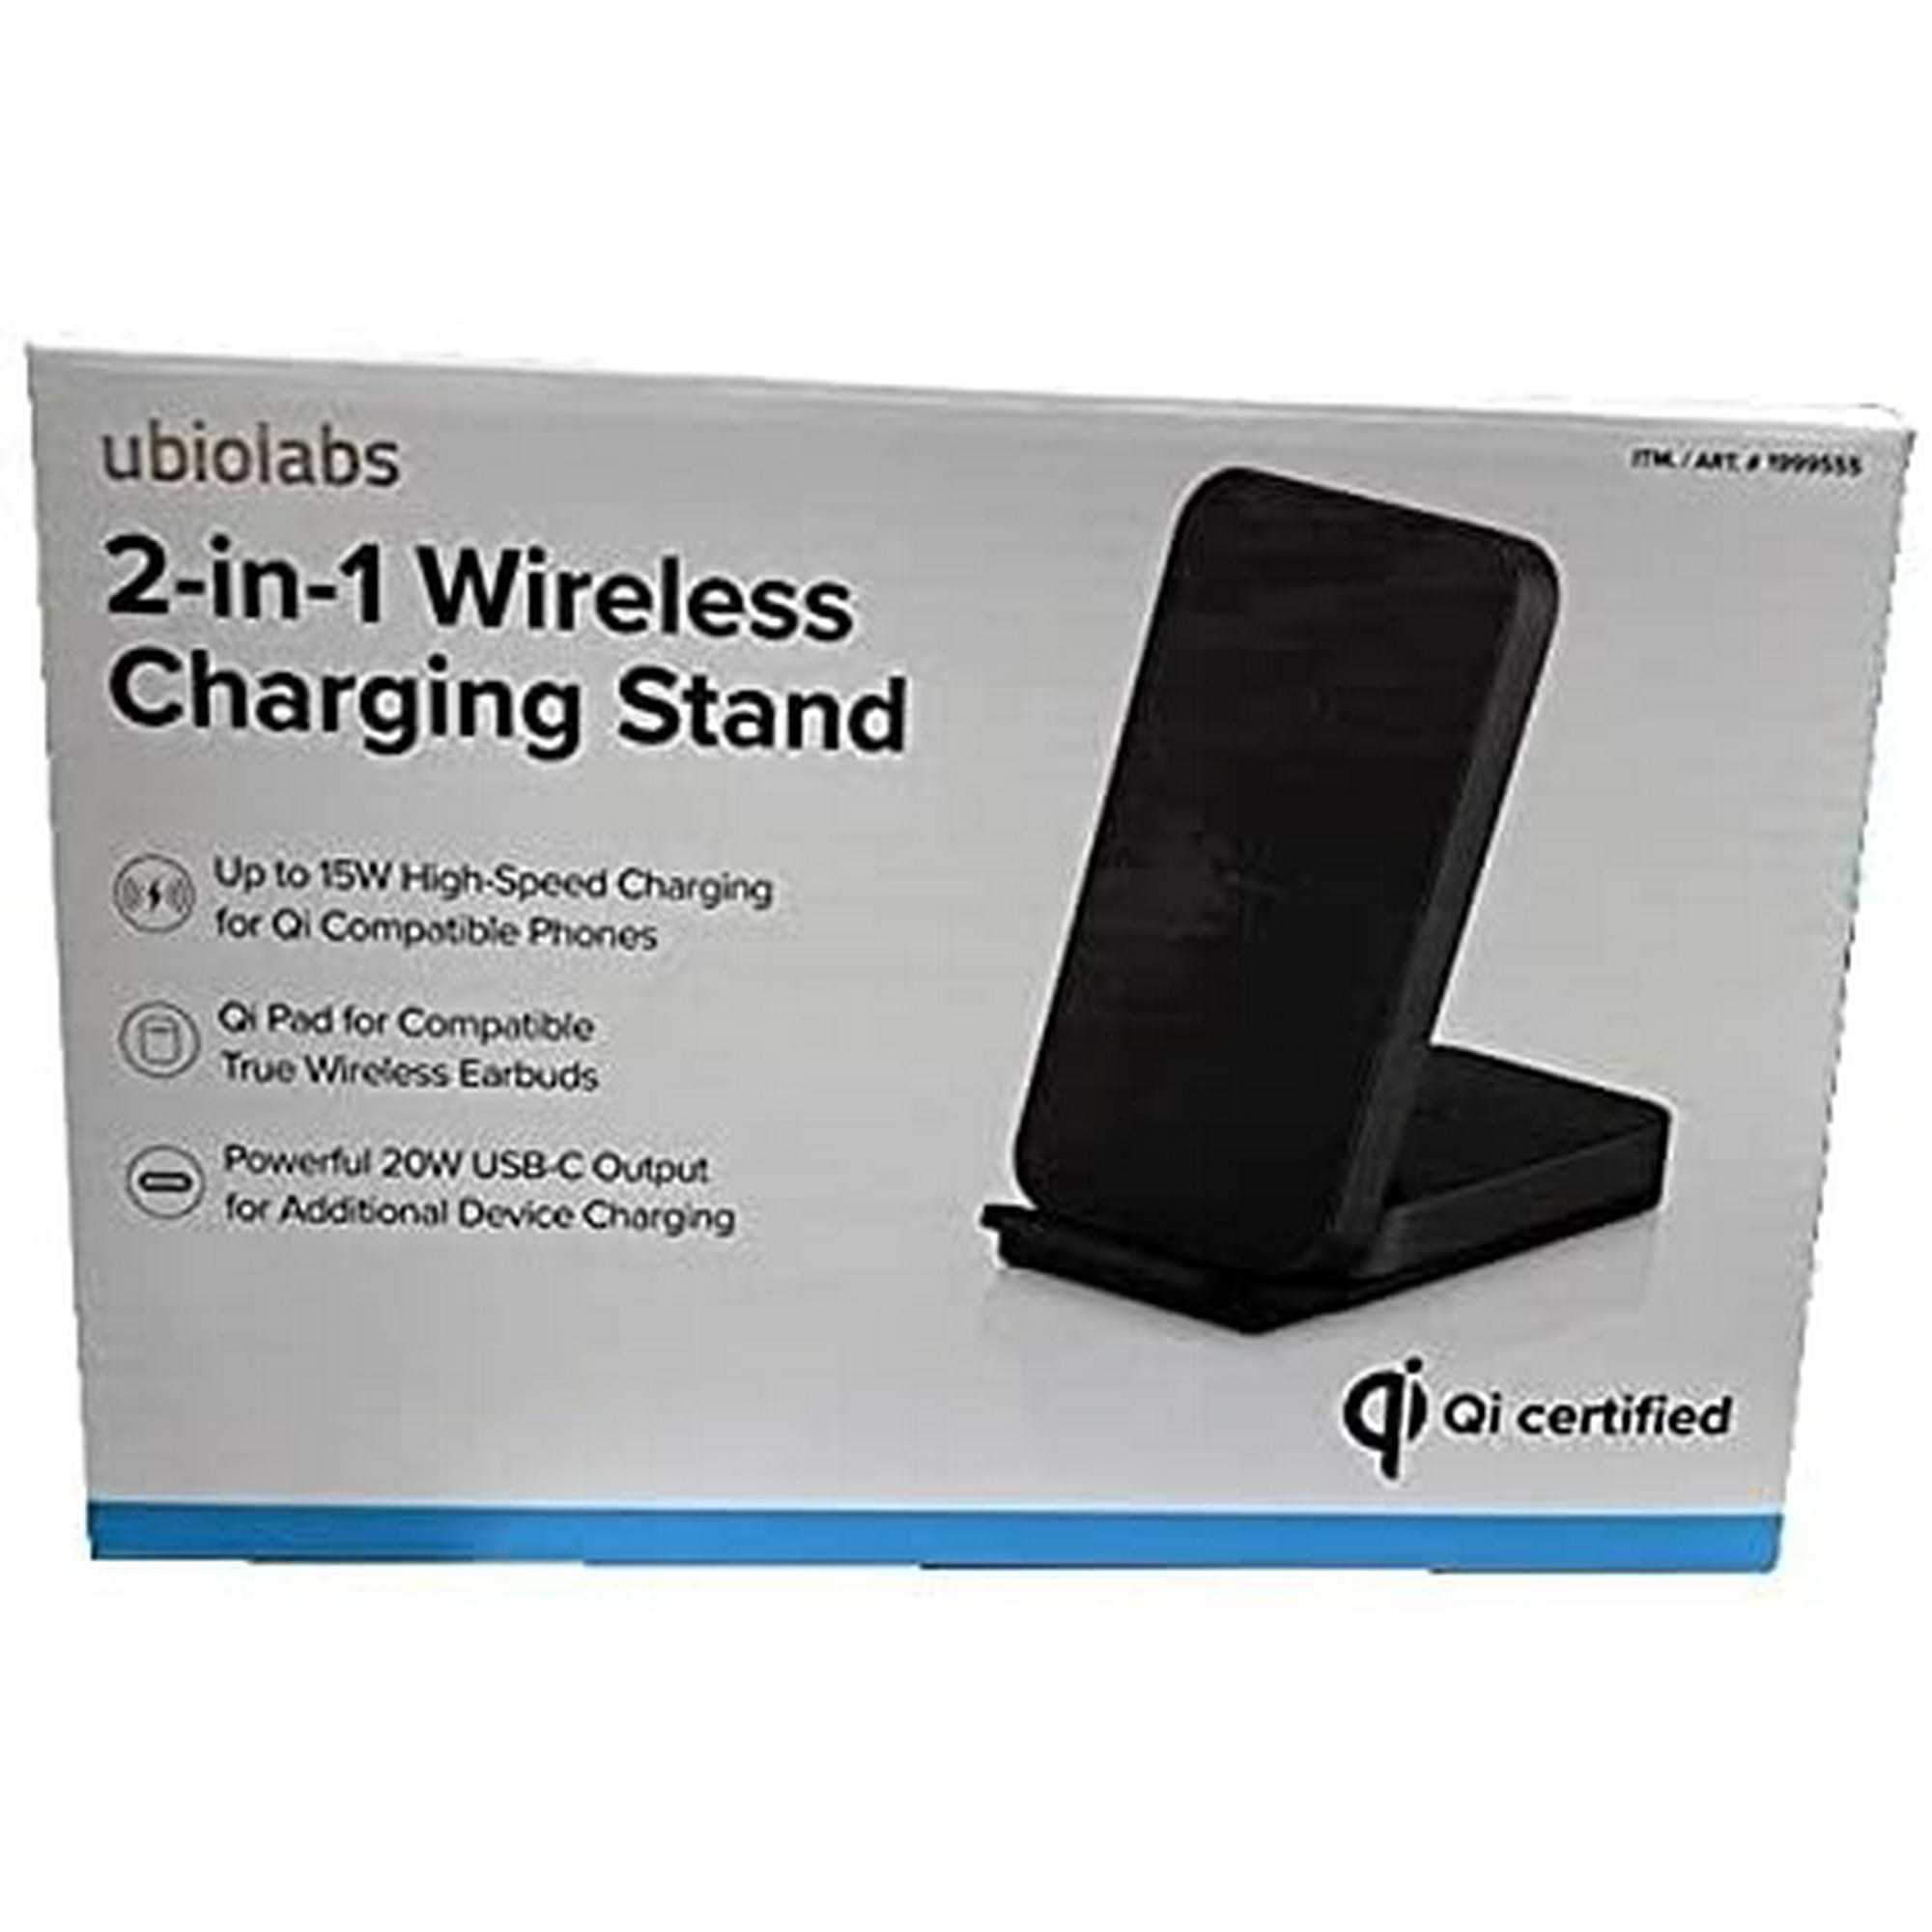 Ubio Labs 2-in-1 Wireless Charging Stand, Black | Walmart Canada